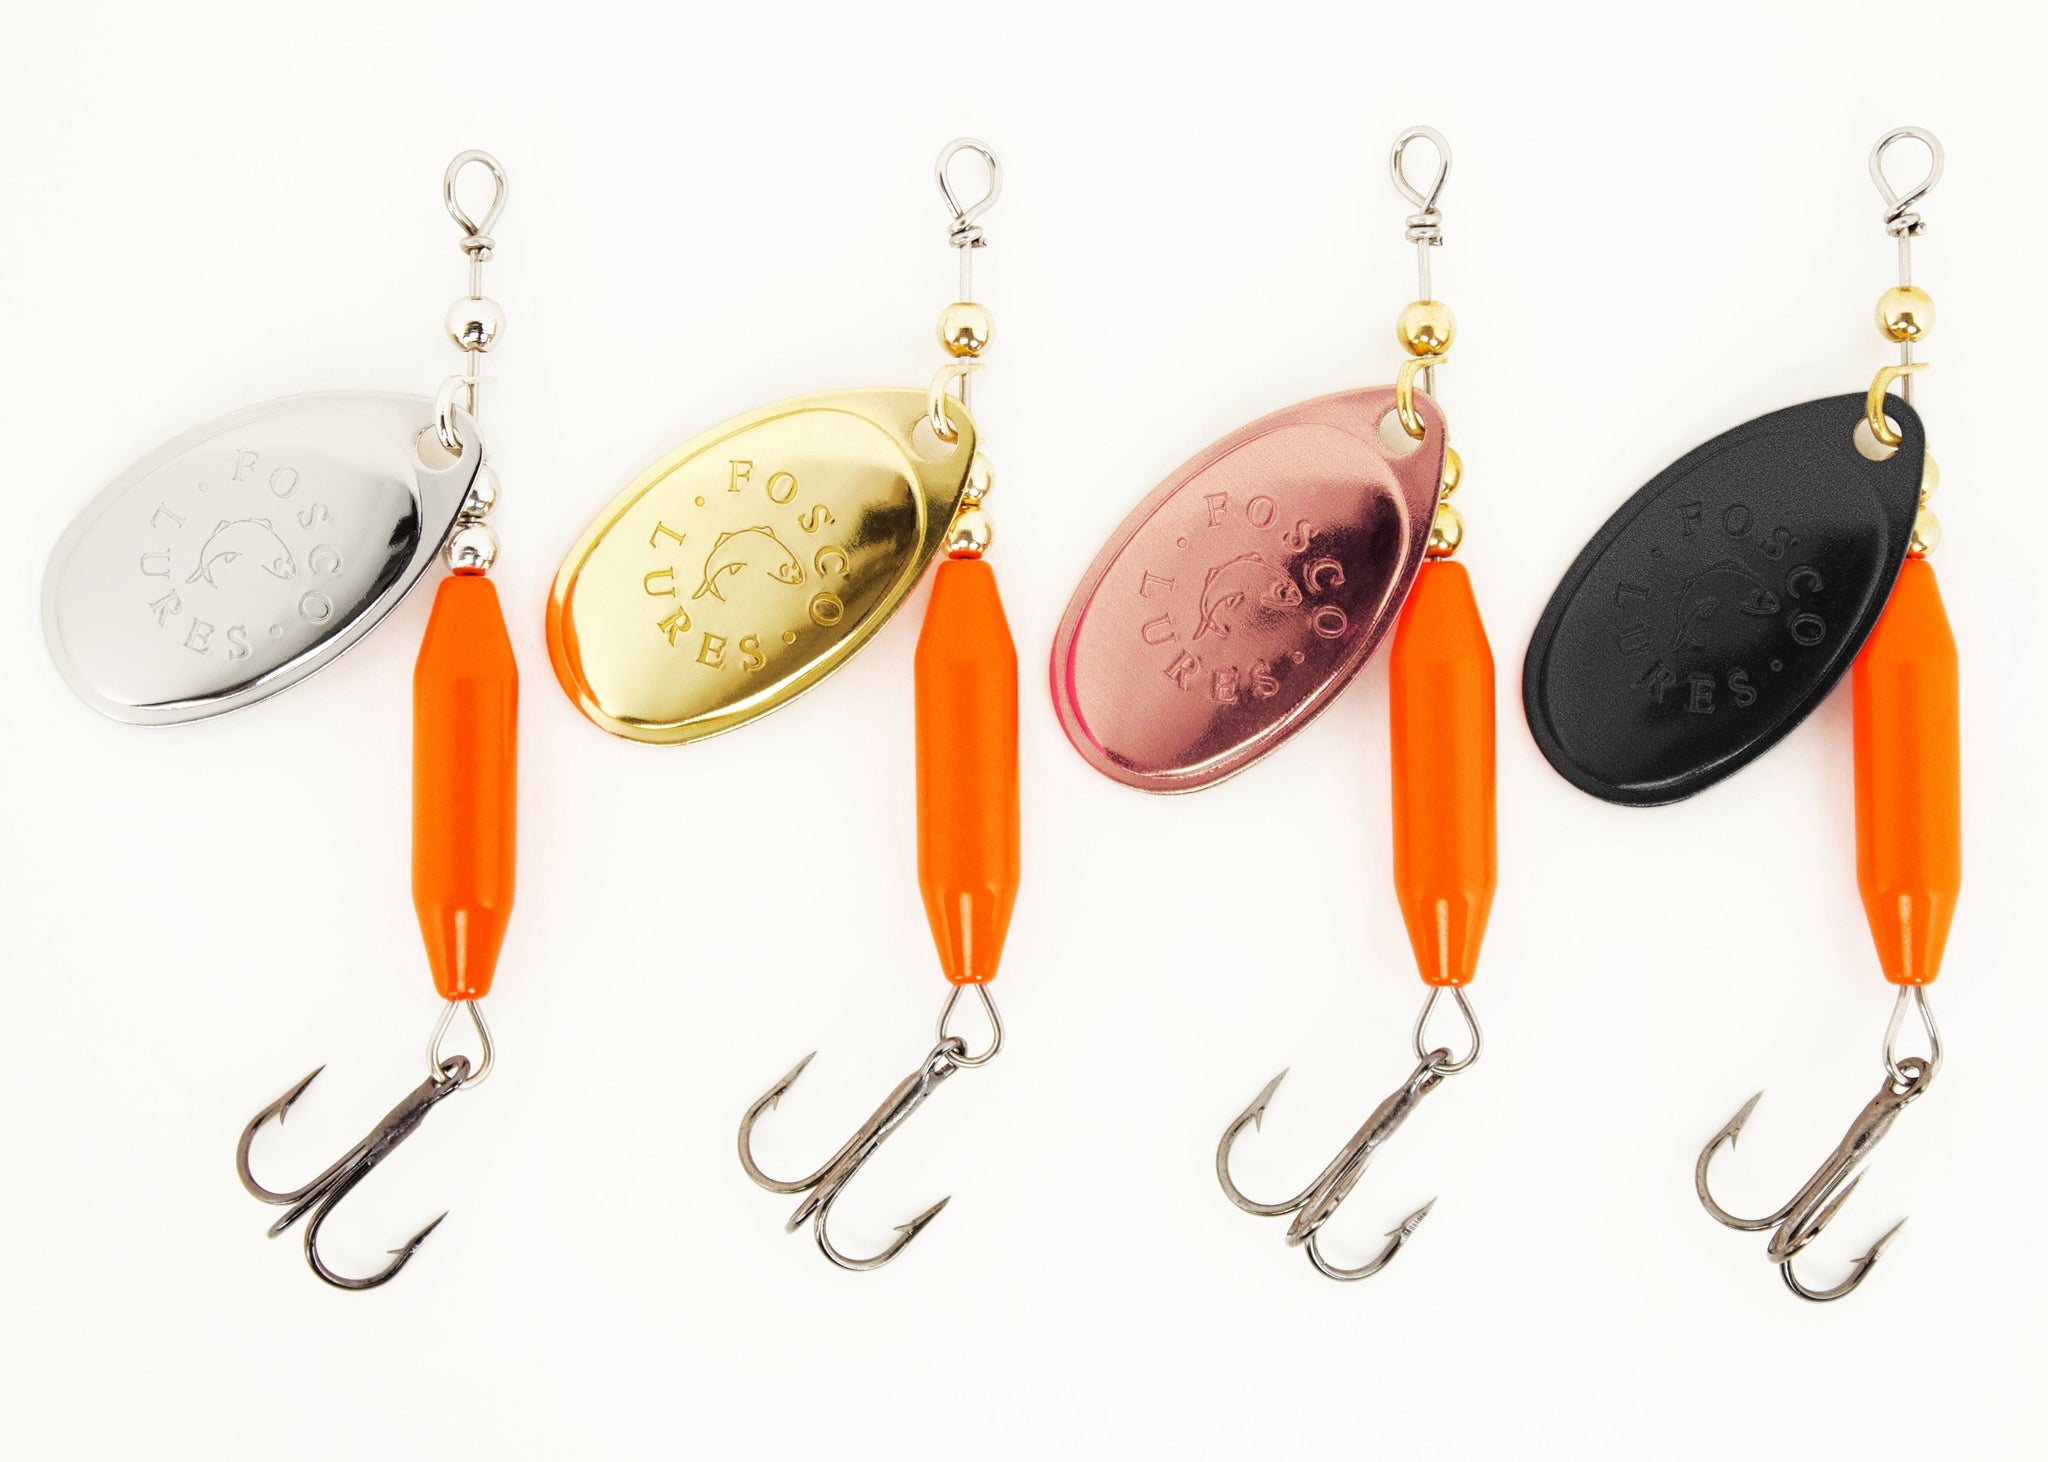 Fosco Handmade Fishing Lures • Brite Orange Inline Spinner • Made